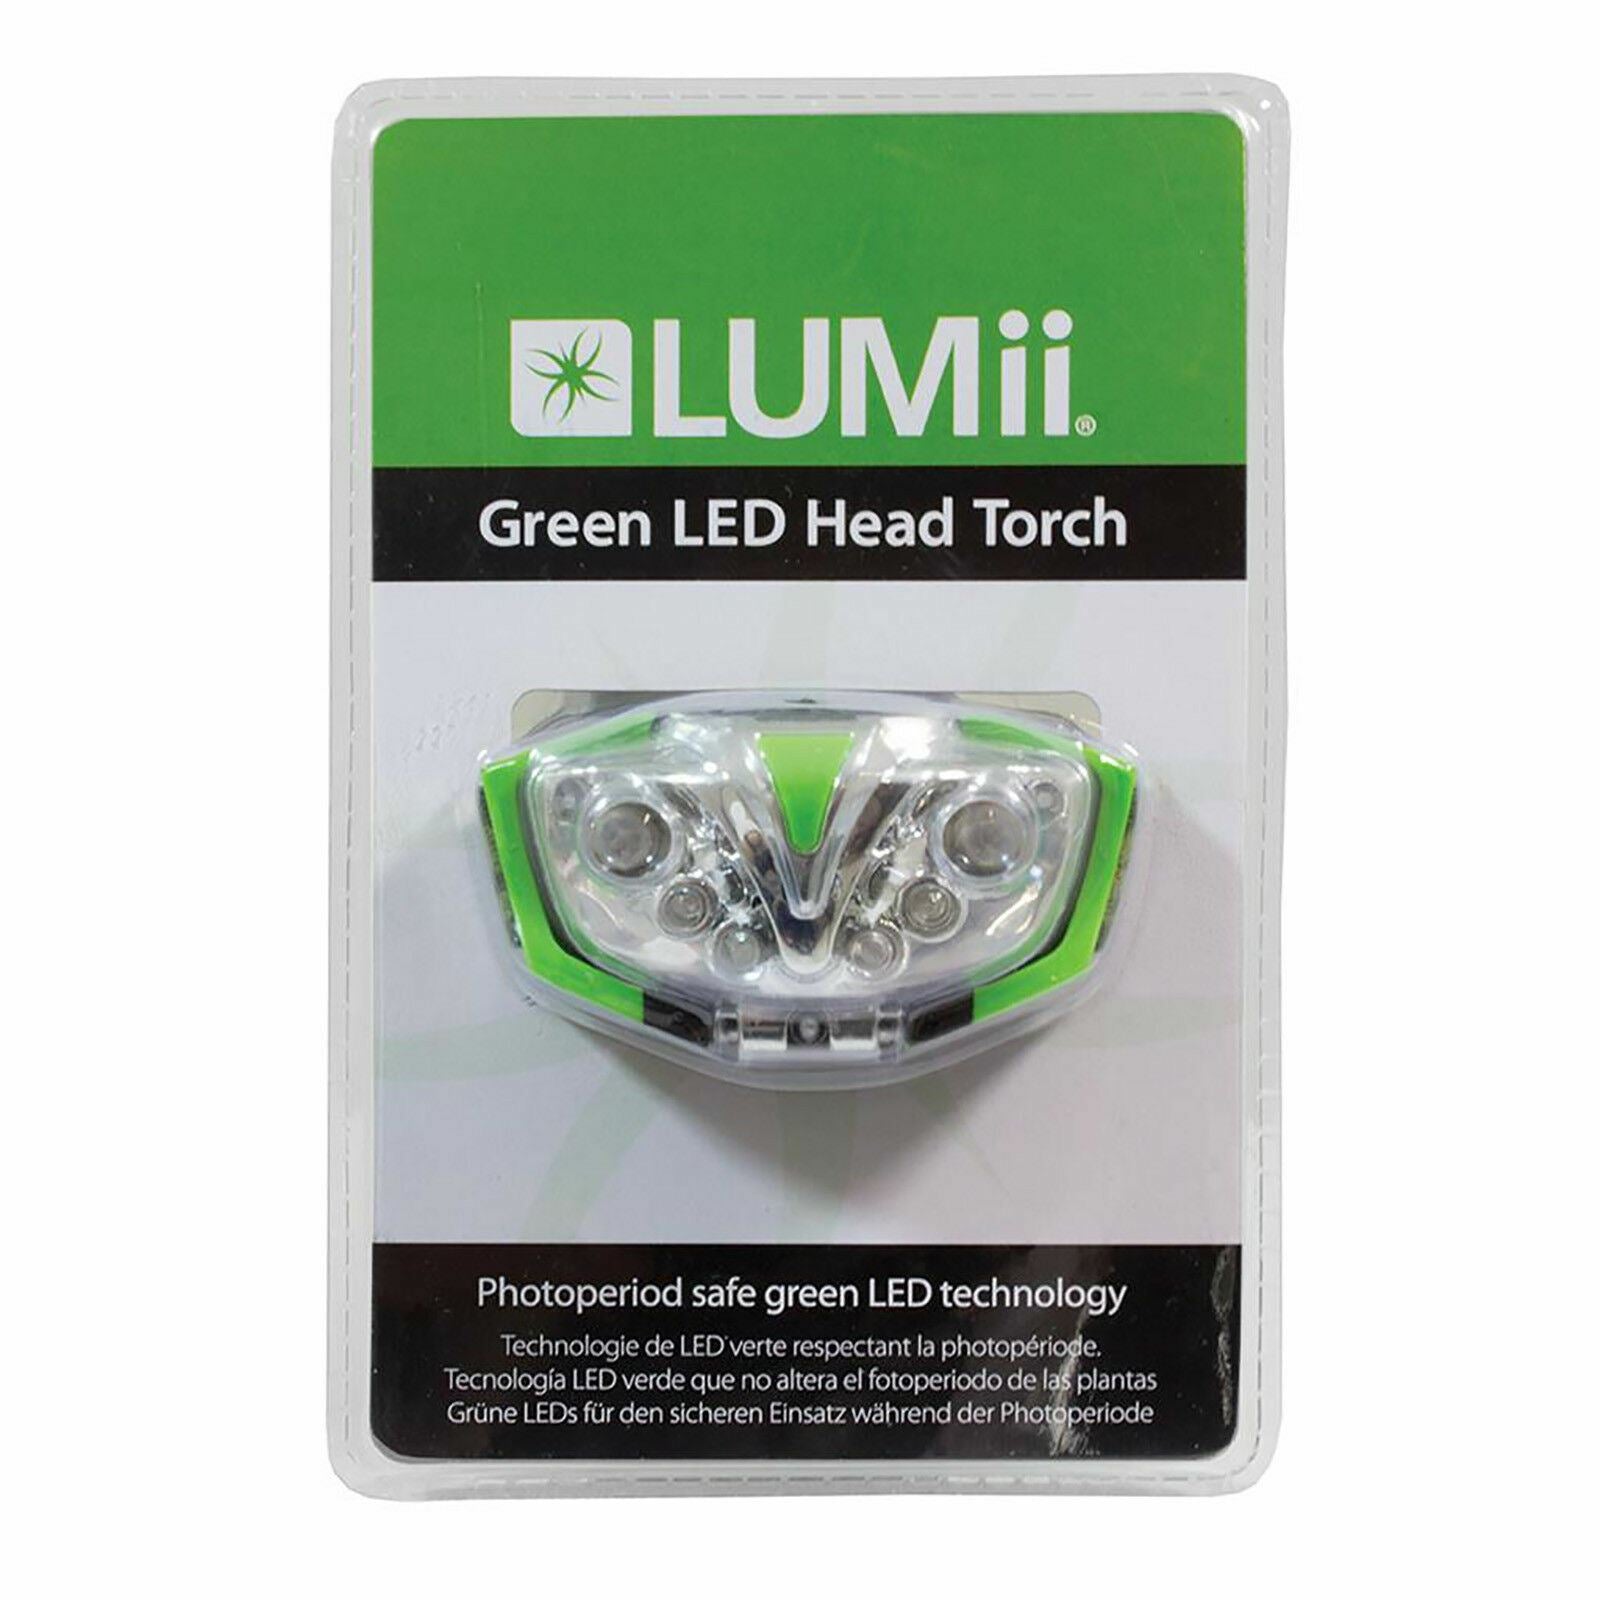 Lumii Green LED Head Torch Safe Hydroponic Growroom Light